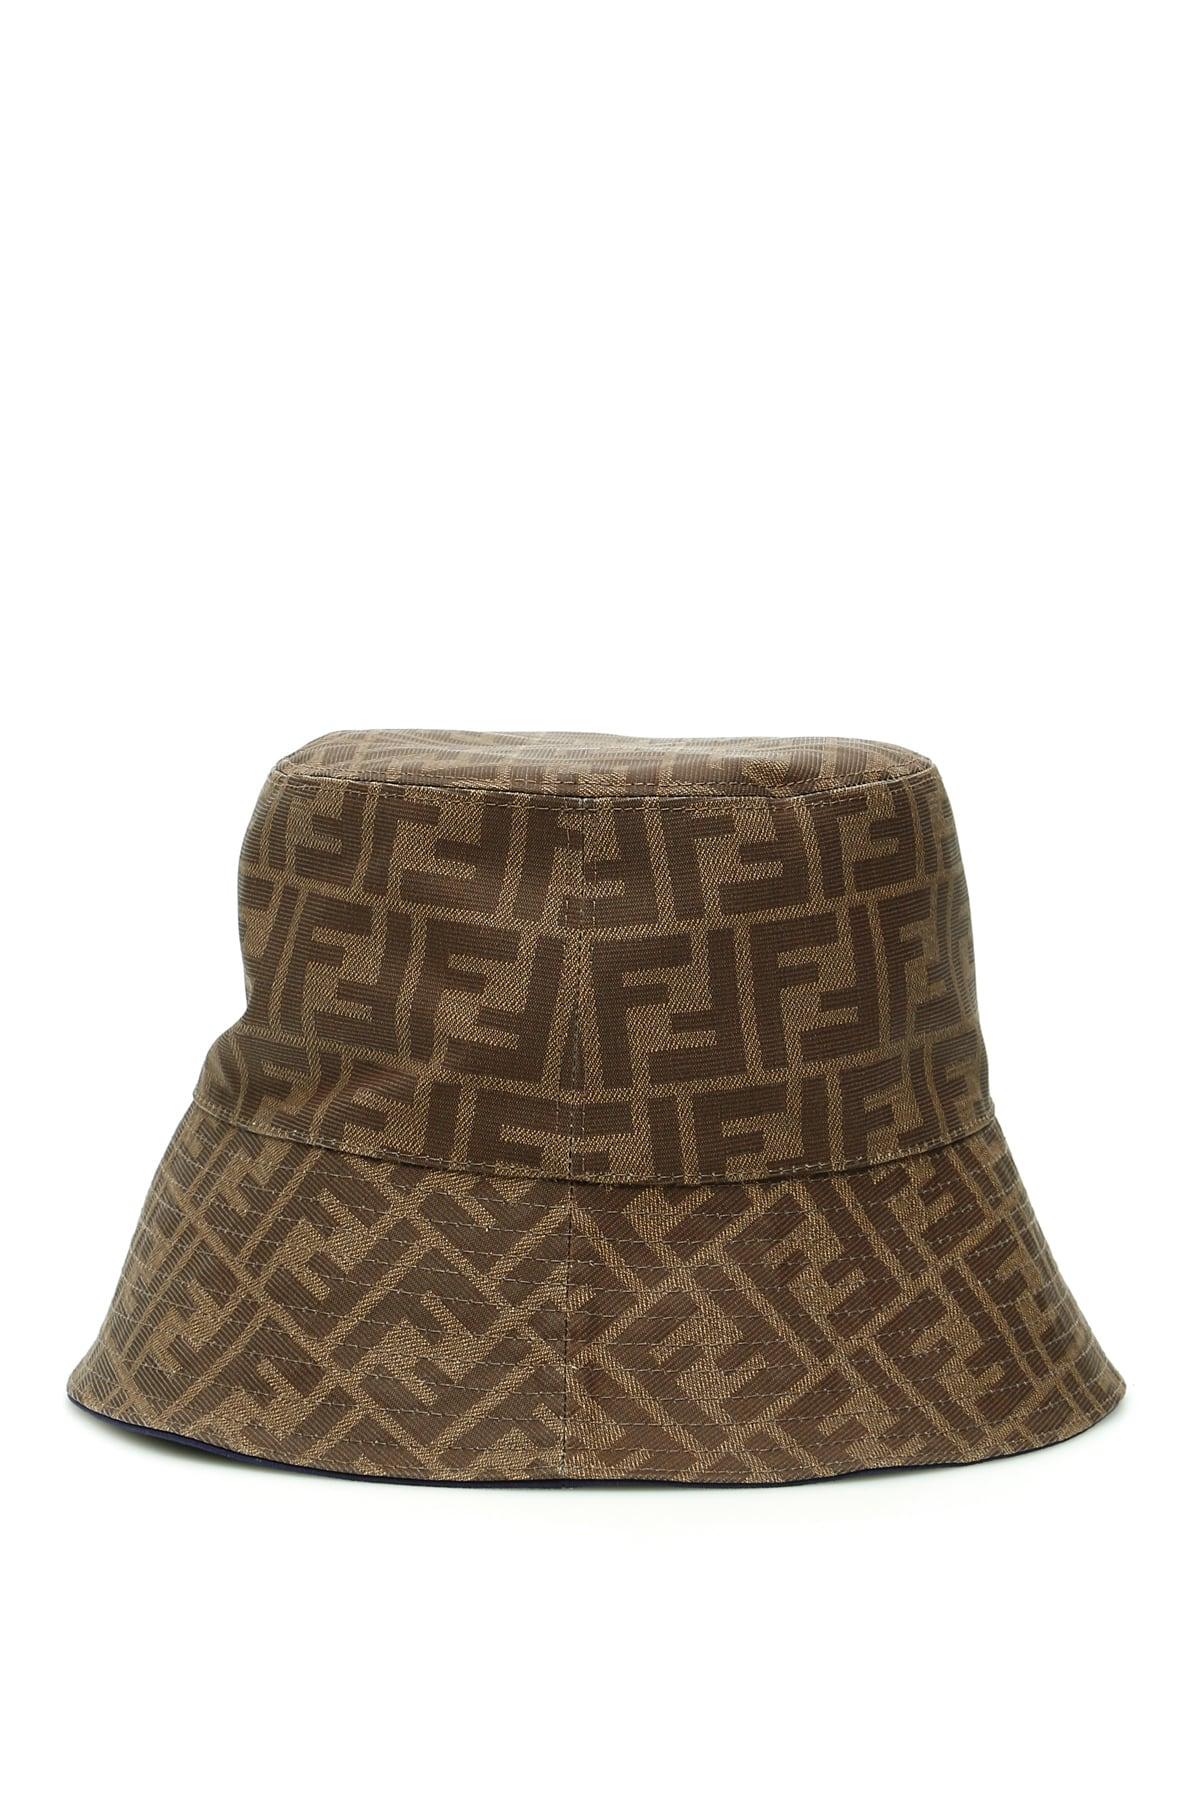 Fendi Reversible Ff Bucket Hat in Brown,Beige,Blue (Brown) for Men 